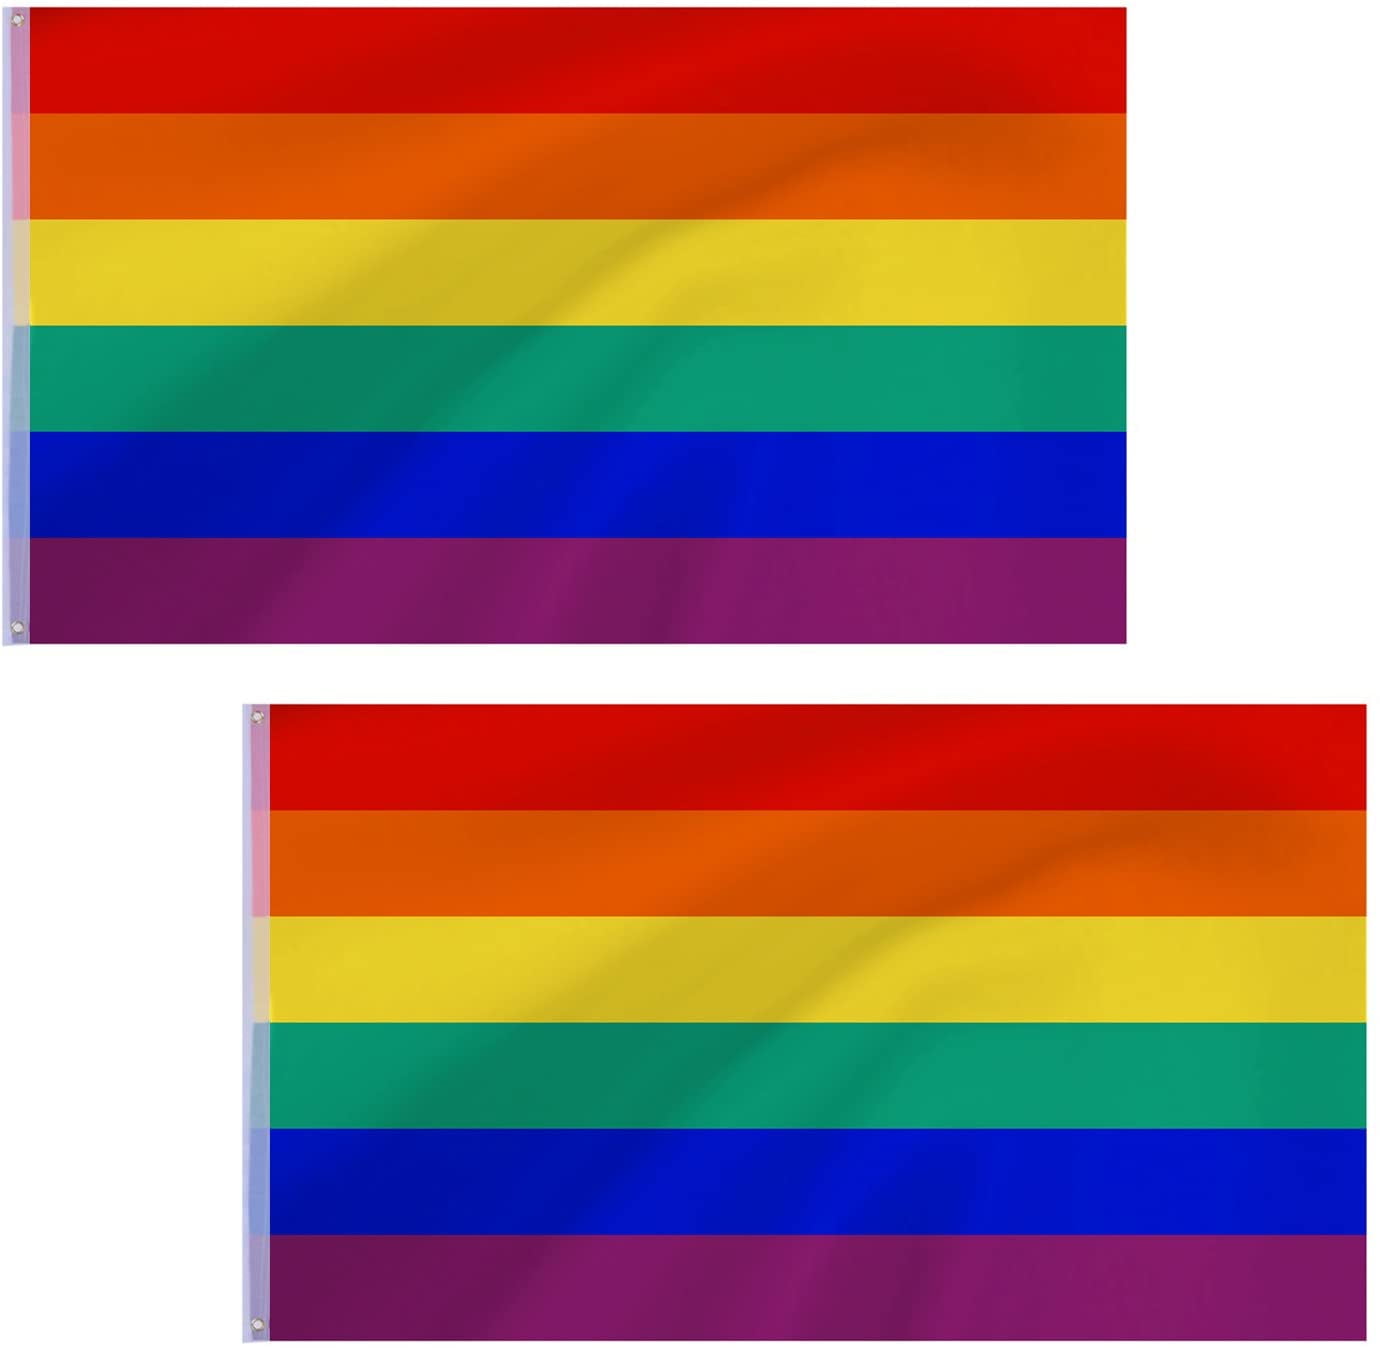 150*90cm Rainbow Pride Flag Banner LGBTQ Gay Lesbian Love Equal 